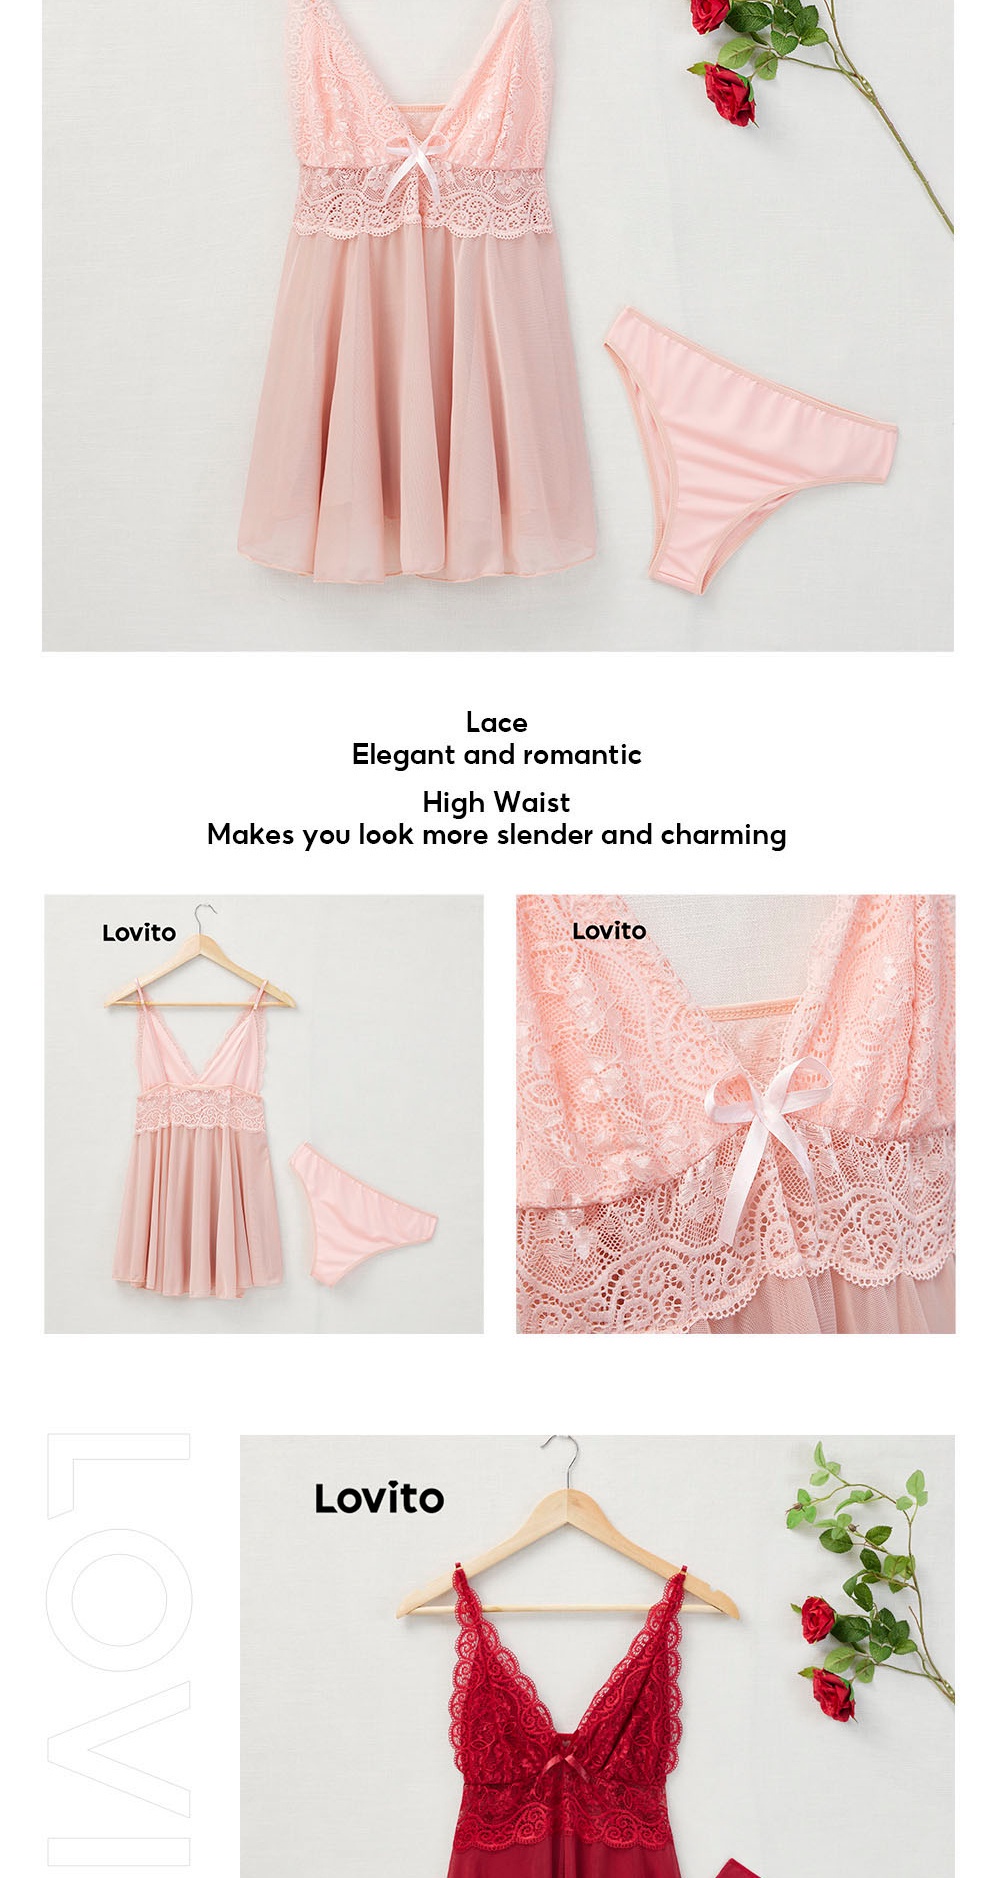 Sleepwear - Lace High Waist Deep V Neck Nighties Sleepwear Lingerie Set - Elegant and Comfortable - SHOPEE MALL | Sri Lanka